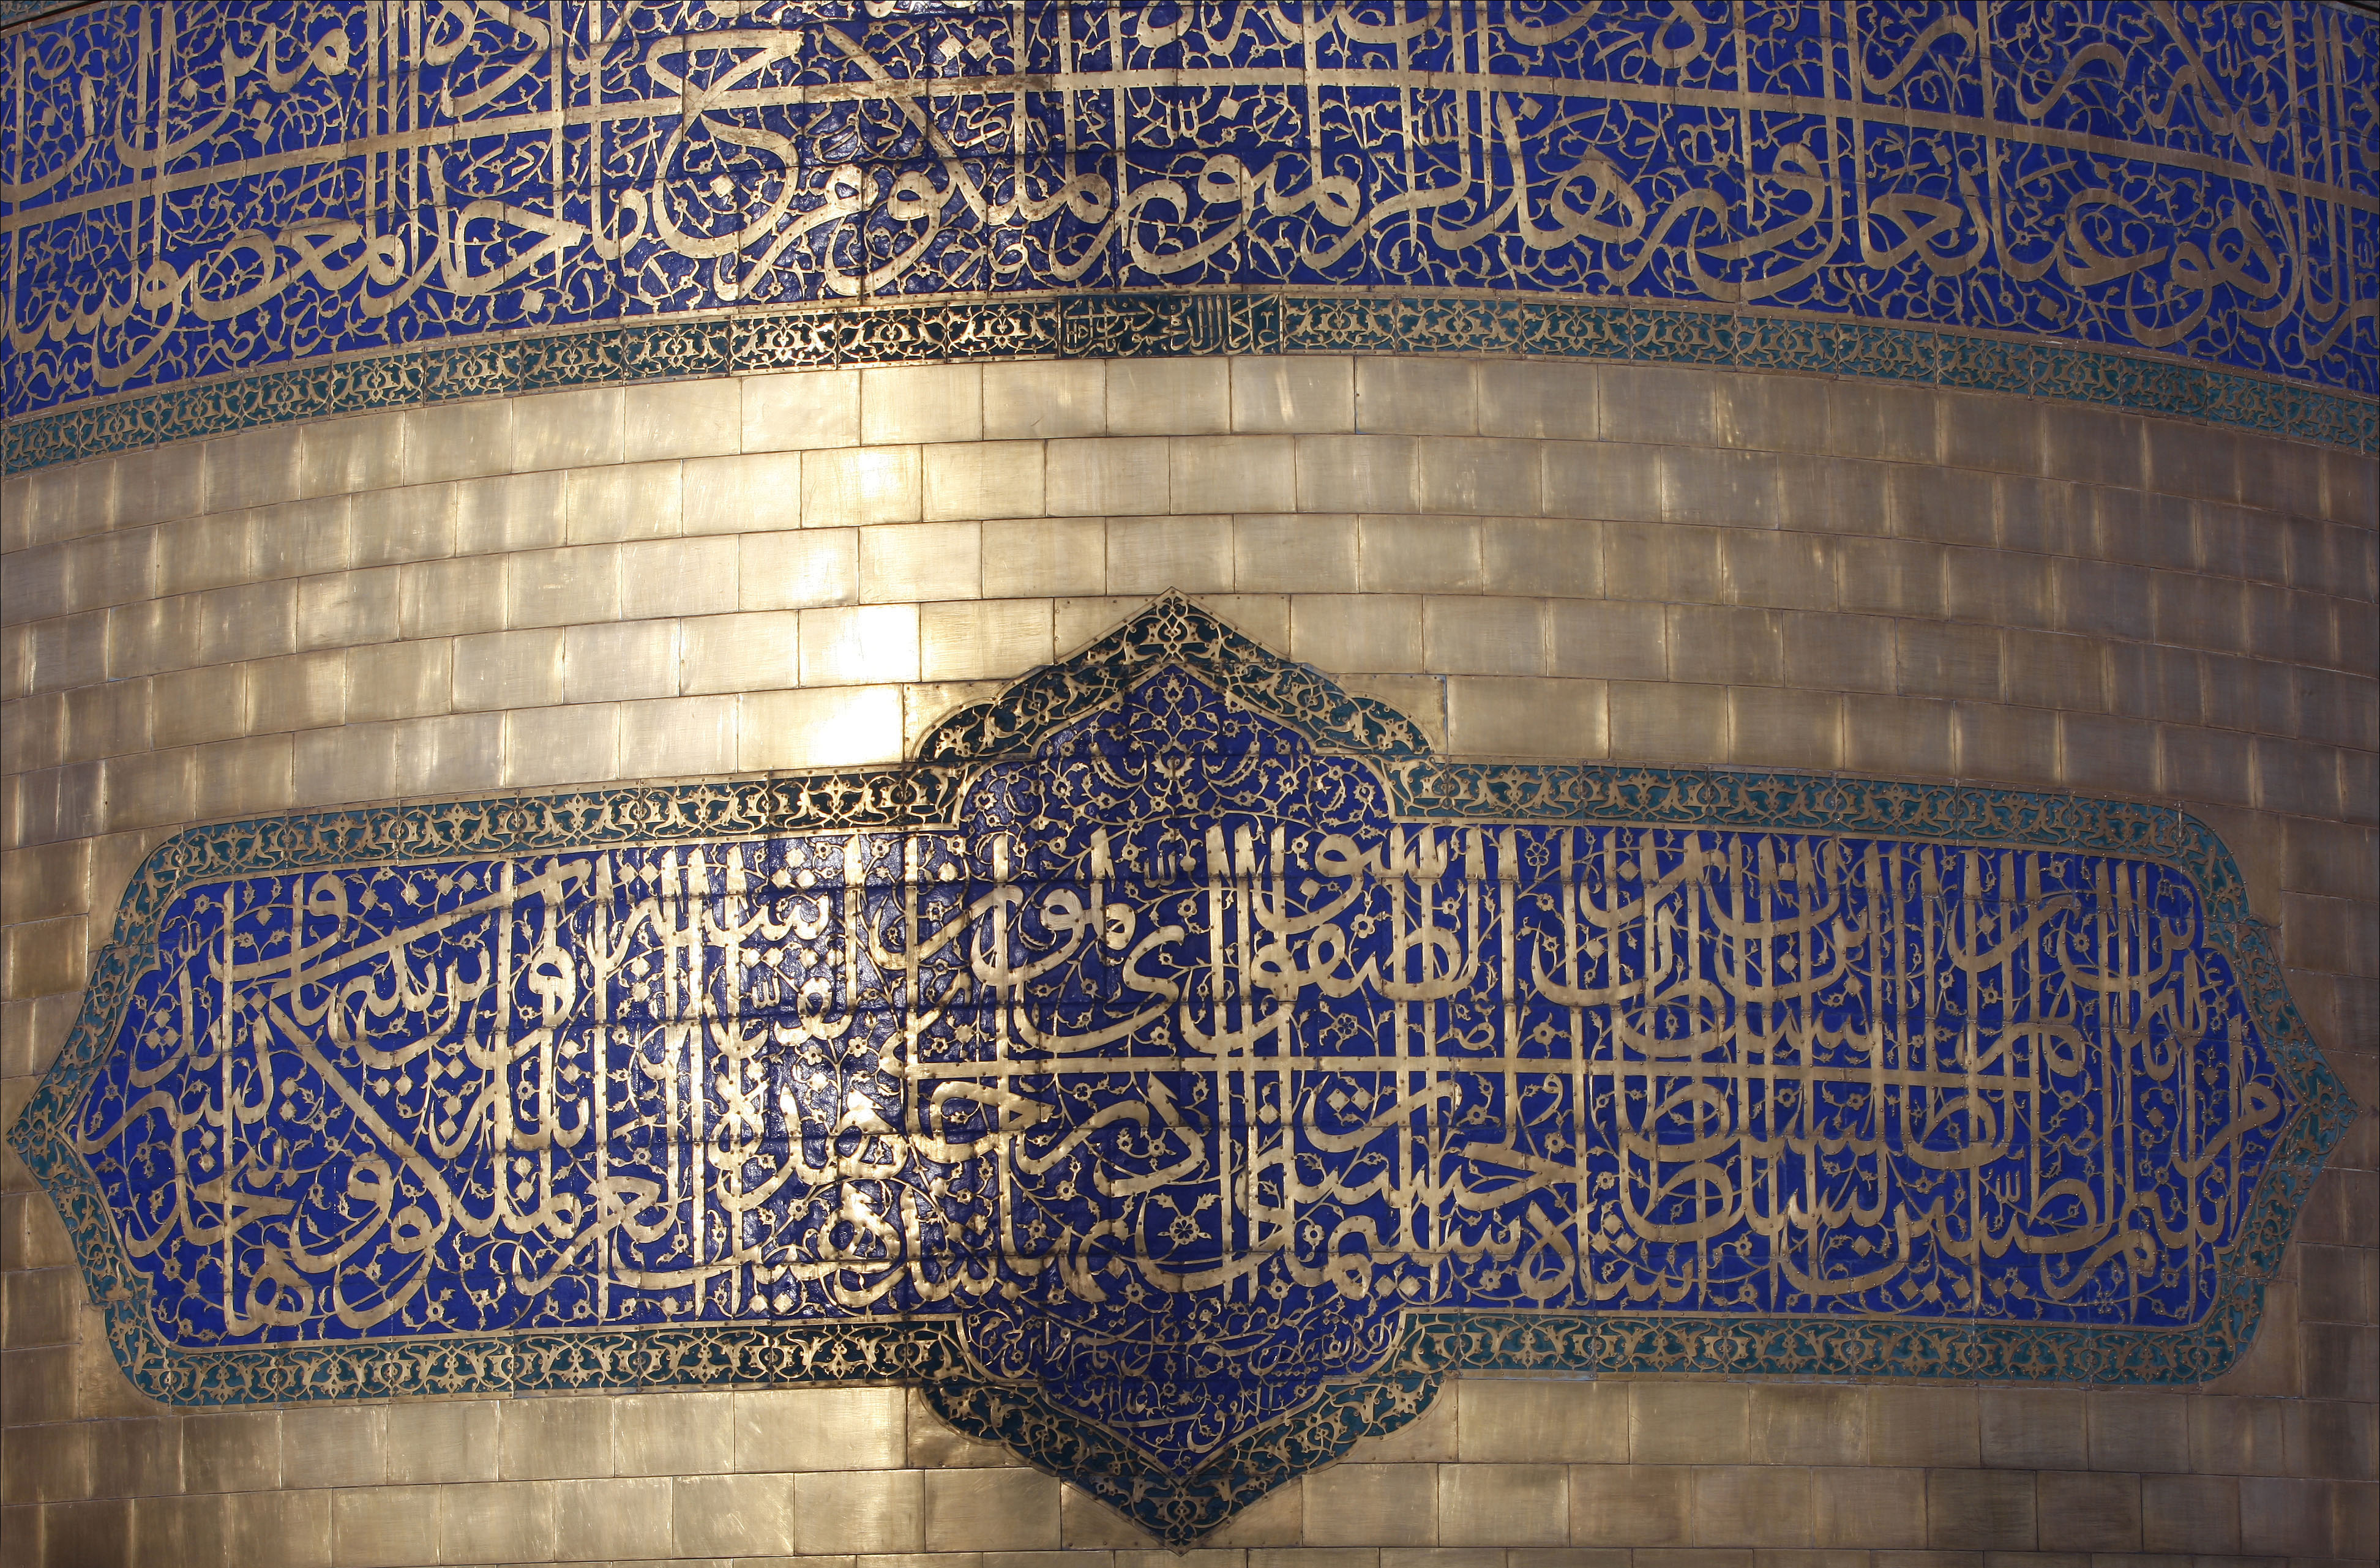 Имама реза. Храм имама резы. Исламское искусство. Орнамент и каллиграфия в мечетях. Арабская каллиграфия в архитектуре.